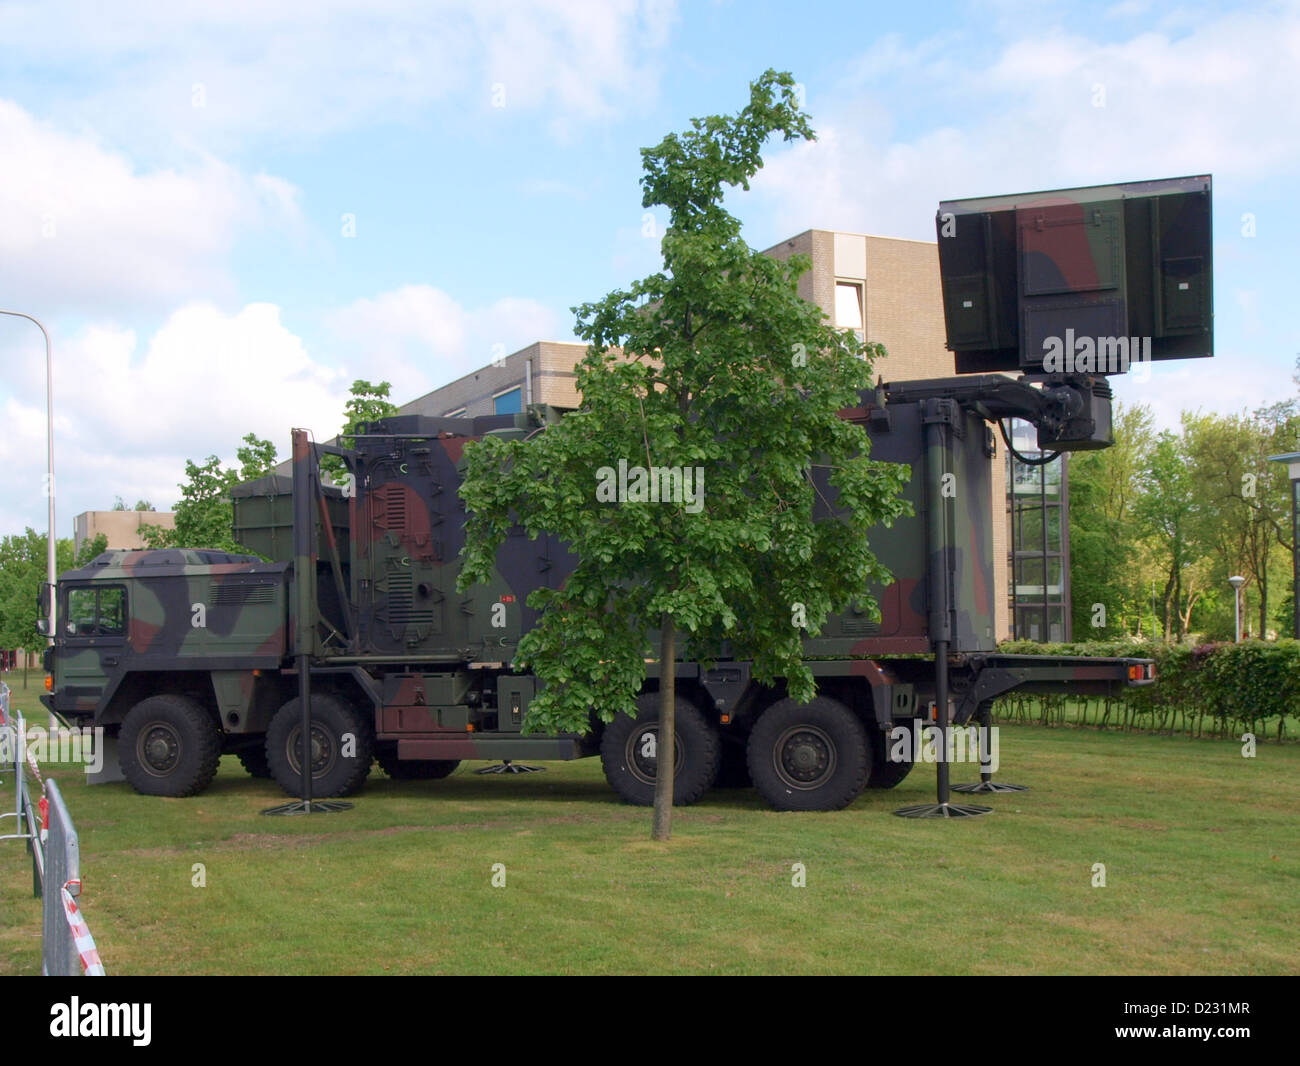 Army Open Day 2012 in the Netherlands Oirschot,Telefunken mobile air surveillance radar on MAN truck Stock Photo